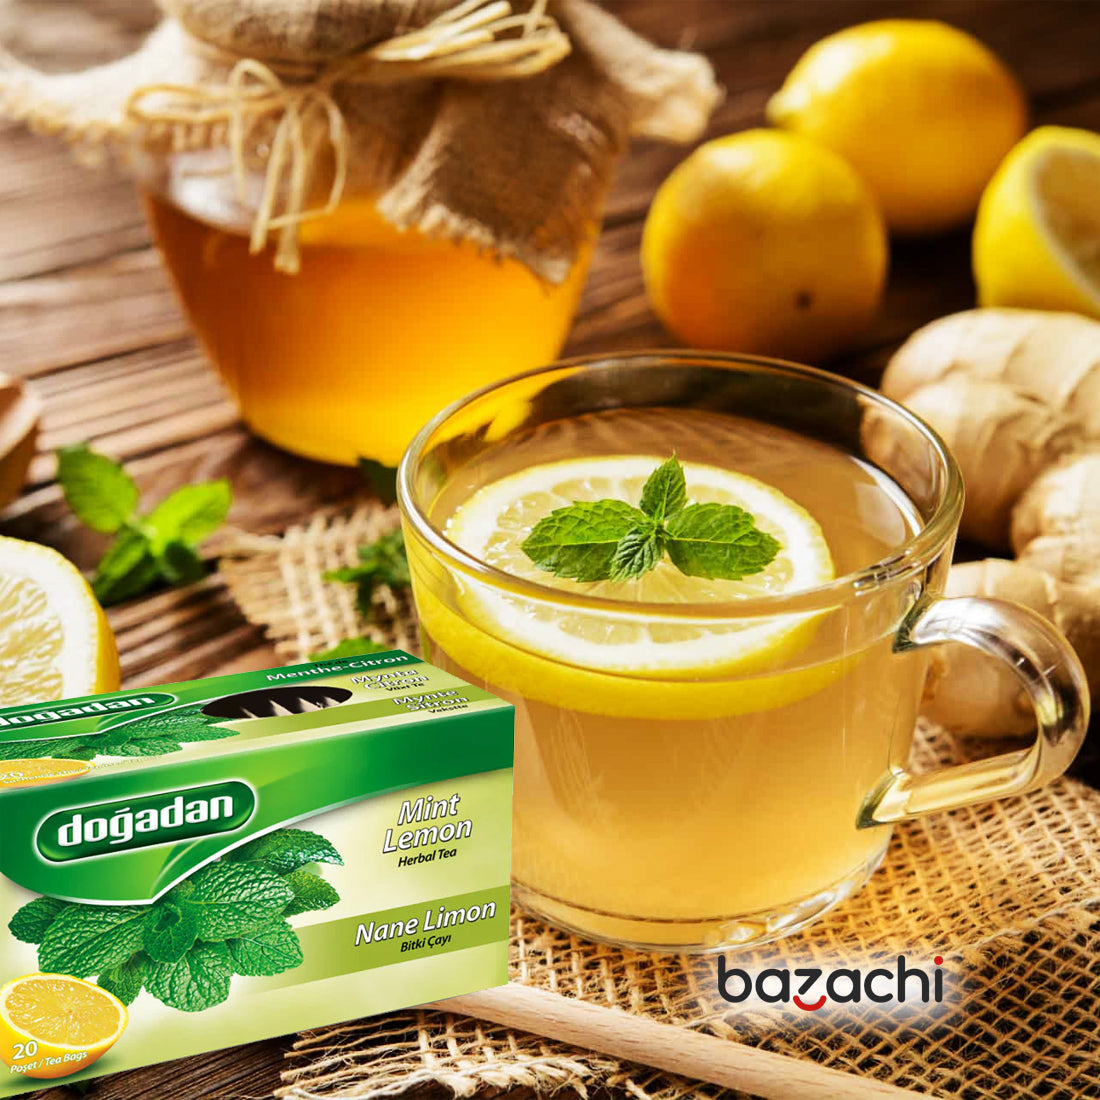 Dogadan Mint Lemon Herbal Tea Nane Limon Cay 20 Tea Bags